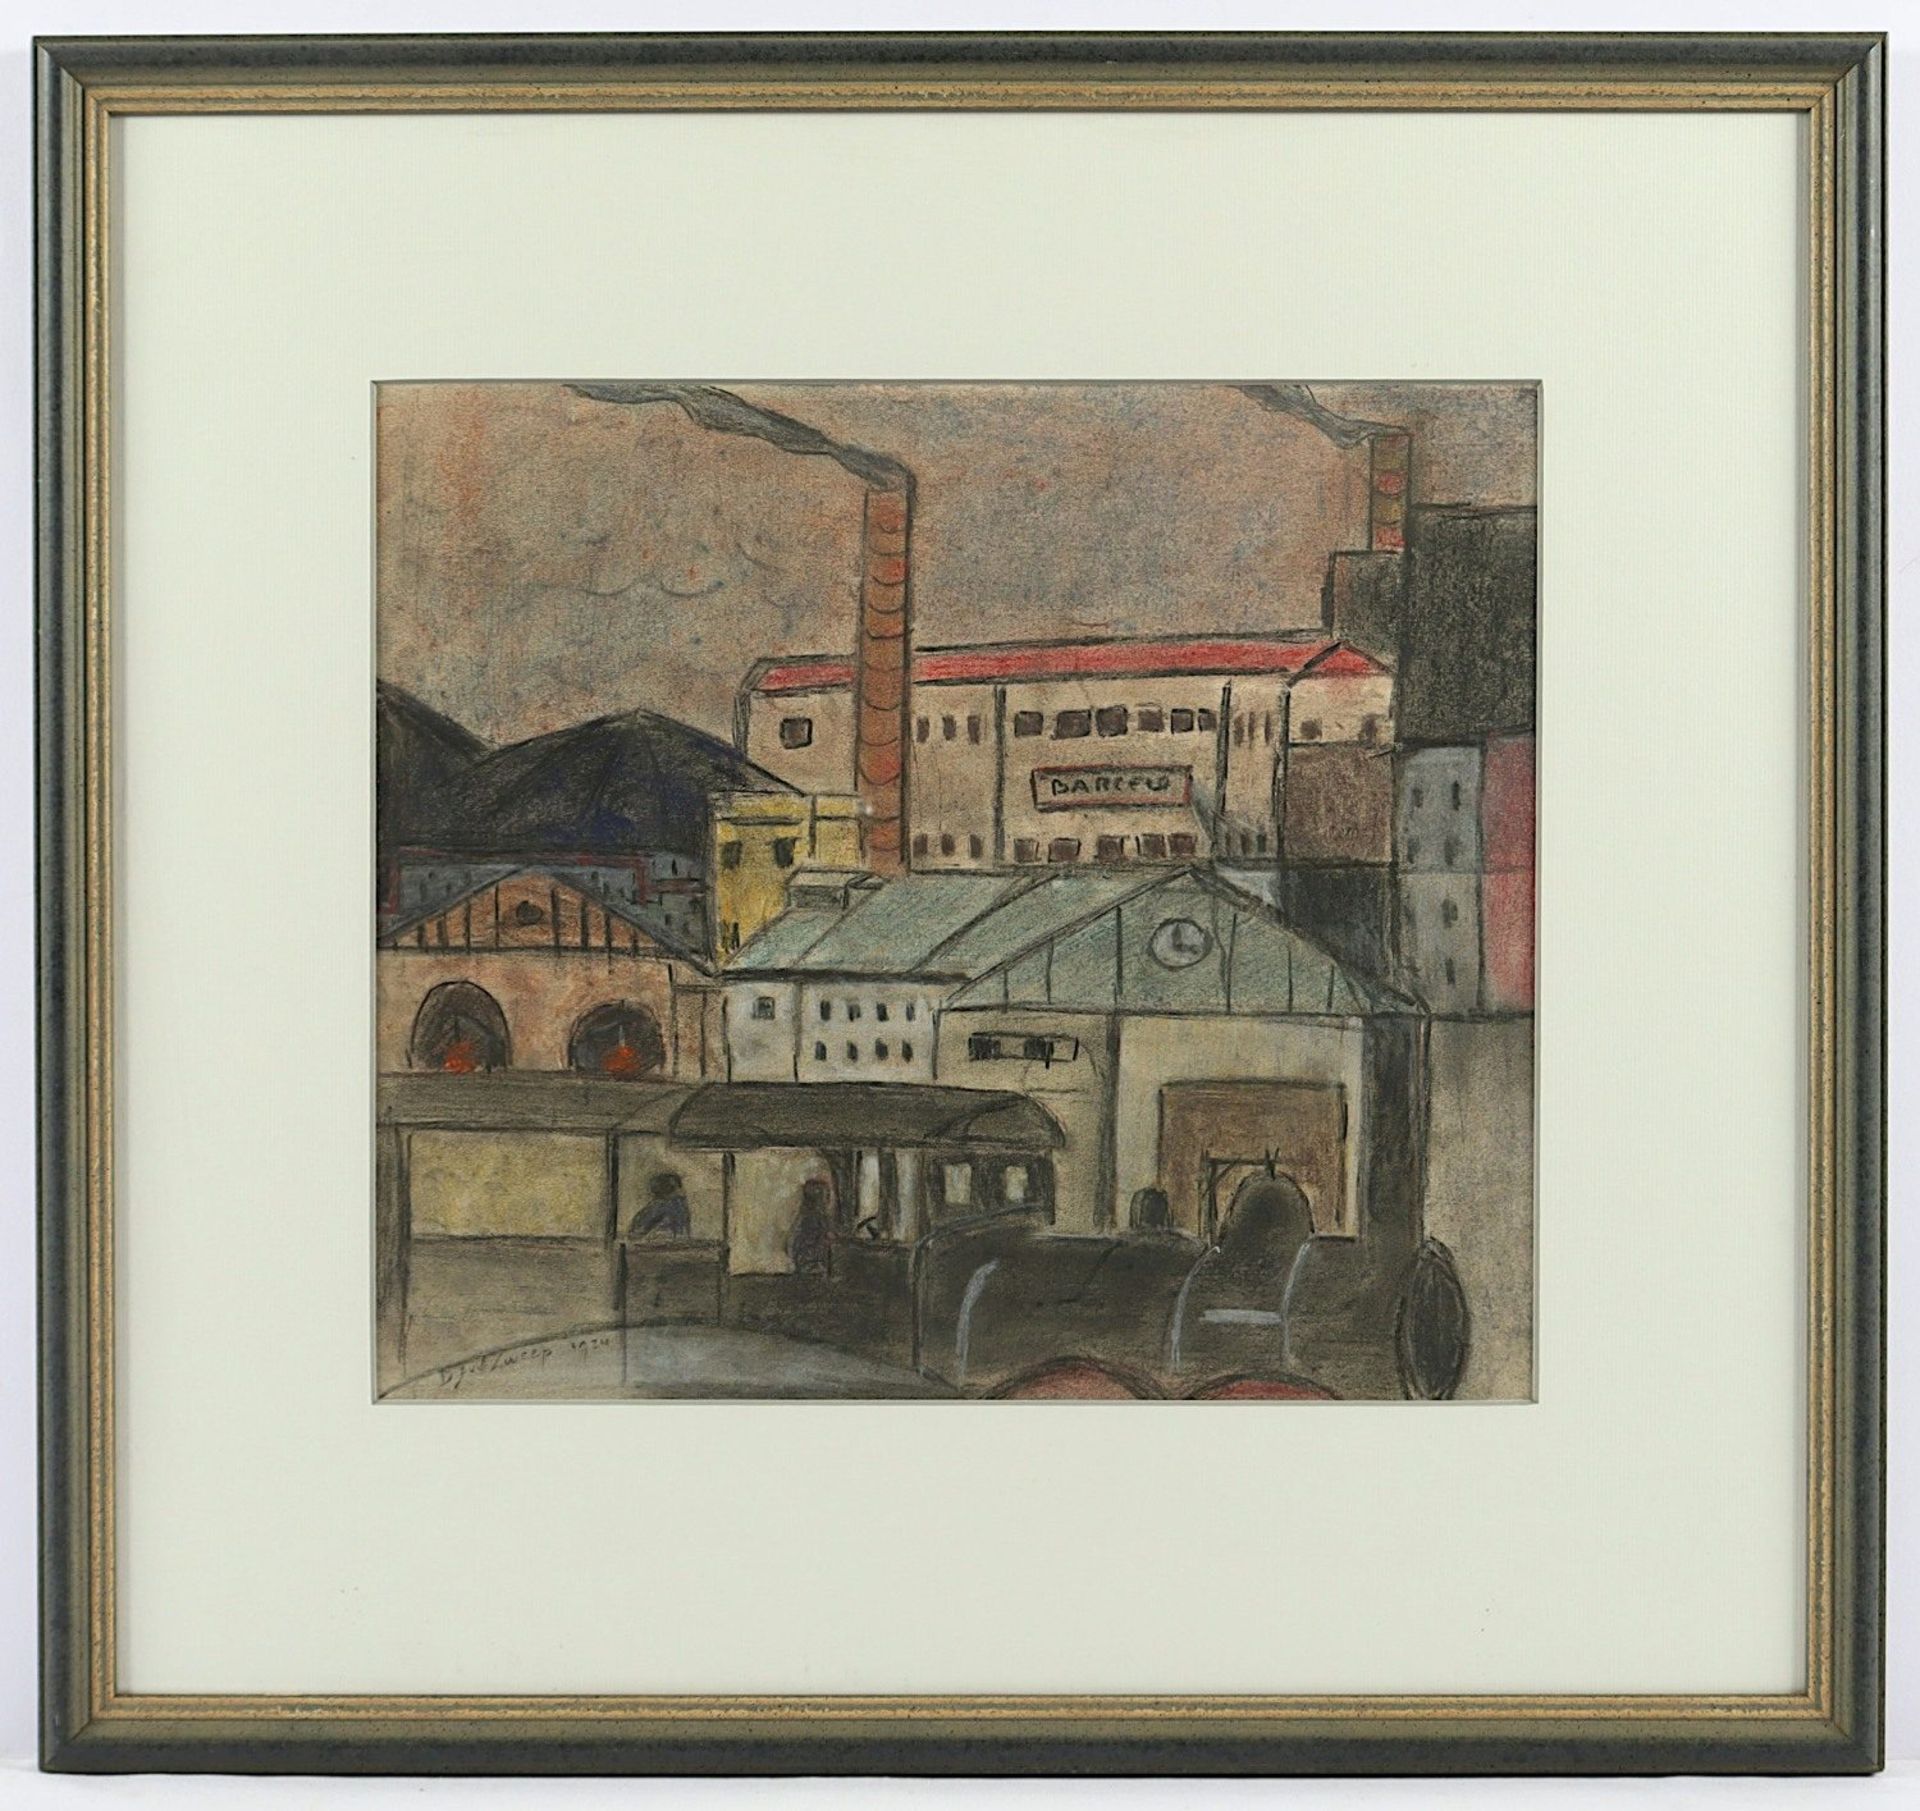 VAN DER ZWEEP, Douwe Jan (1890-1975), "Fabrik mit Lokomotive", Pastell/Papier, 29 x 33 (